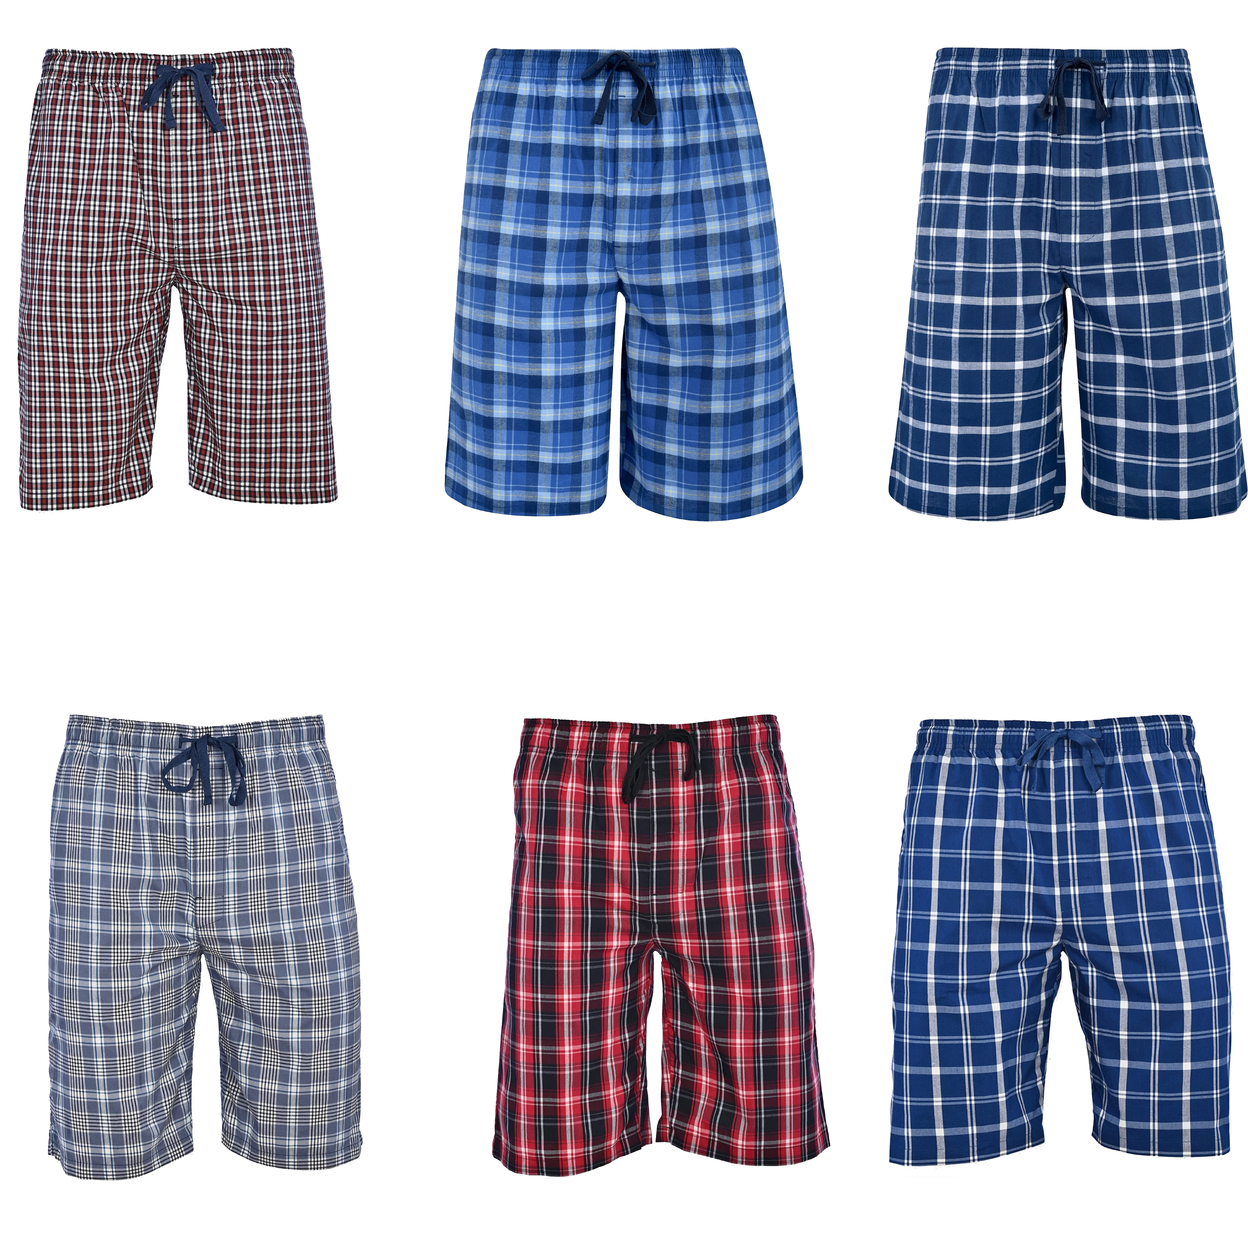 2-Pack: Men's Ultra Soft Plaid Lounge Pajama Sleep Wear Shorts - Black & Blue, X-large